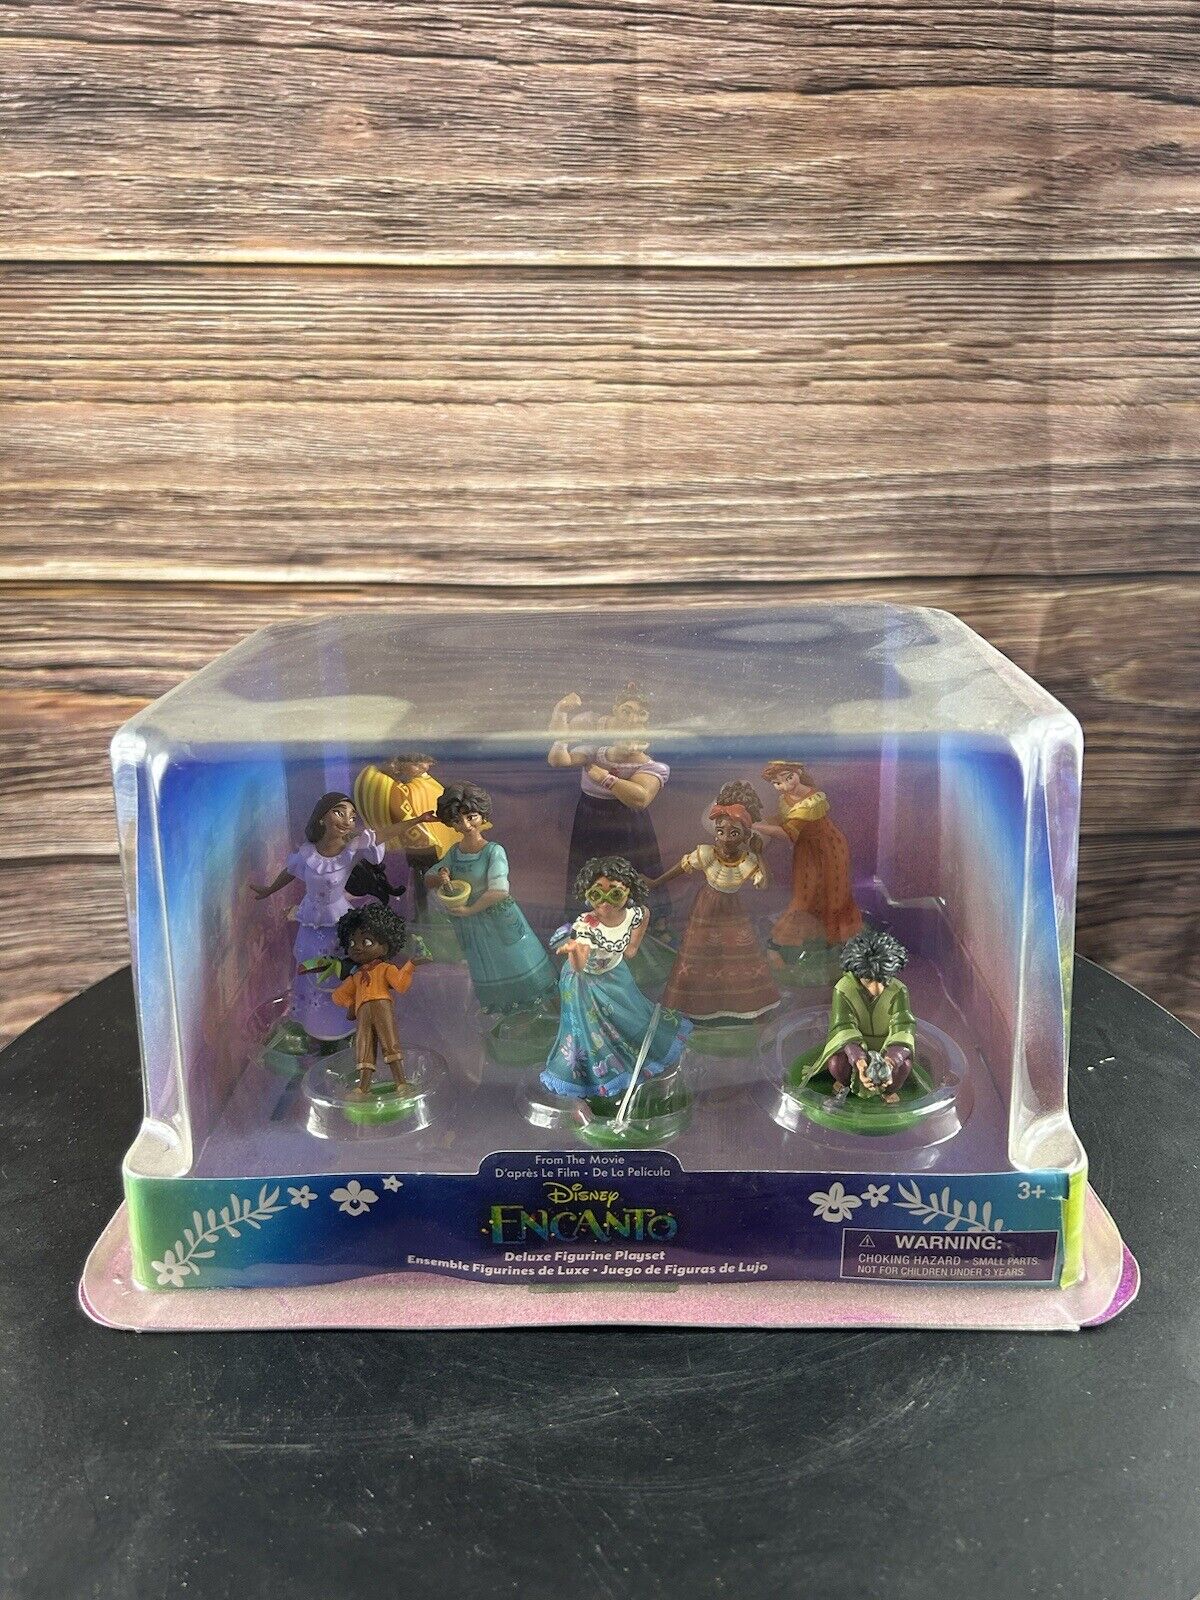 Disney Encanto Deluxe Figurine Figure 9 pieces Play Toy Set